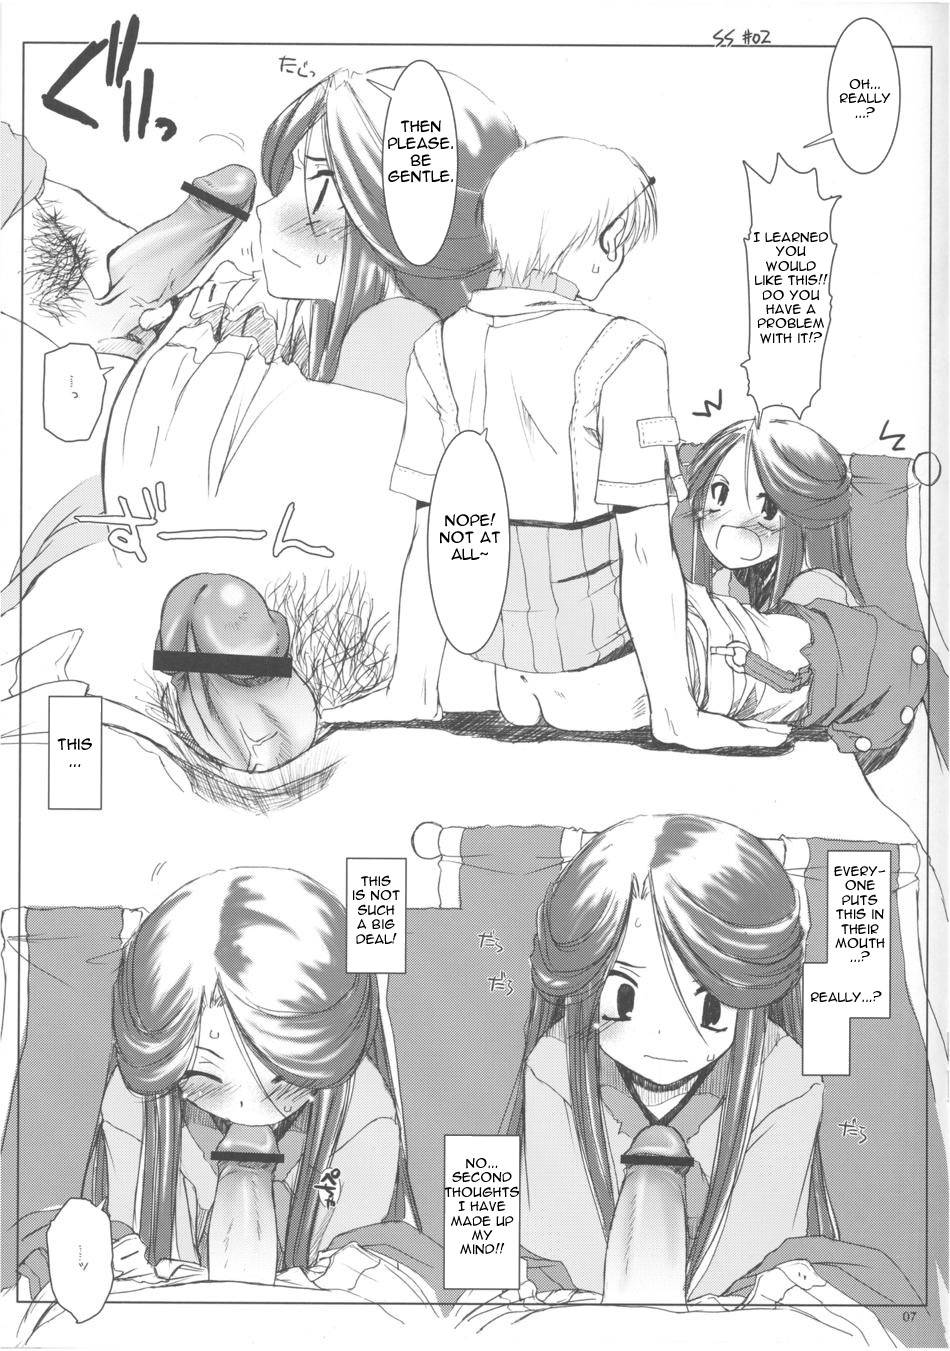 Hentai Manga Comic-Rouch Sketch 19-Read-1